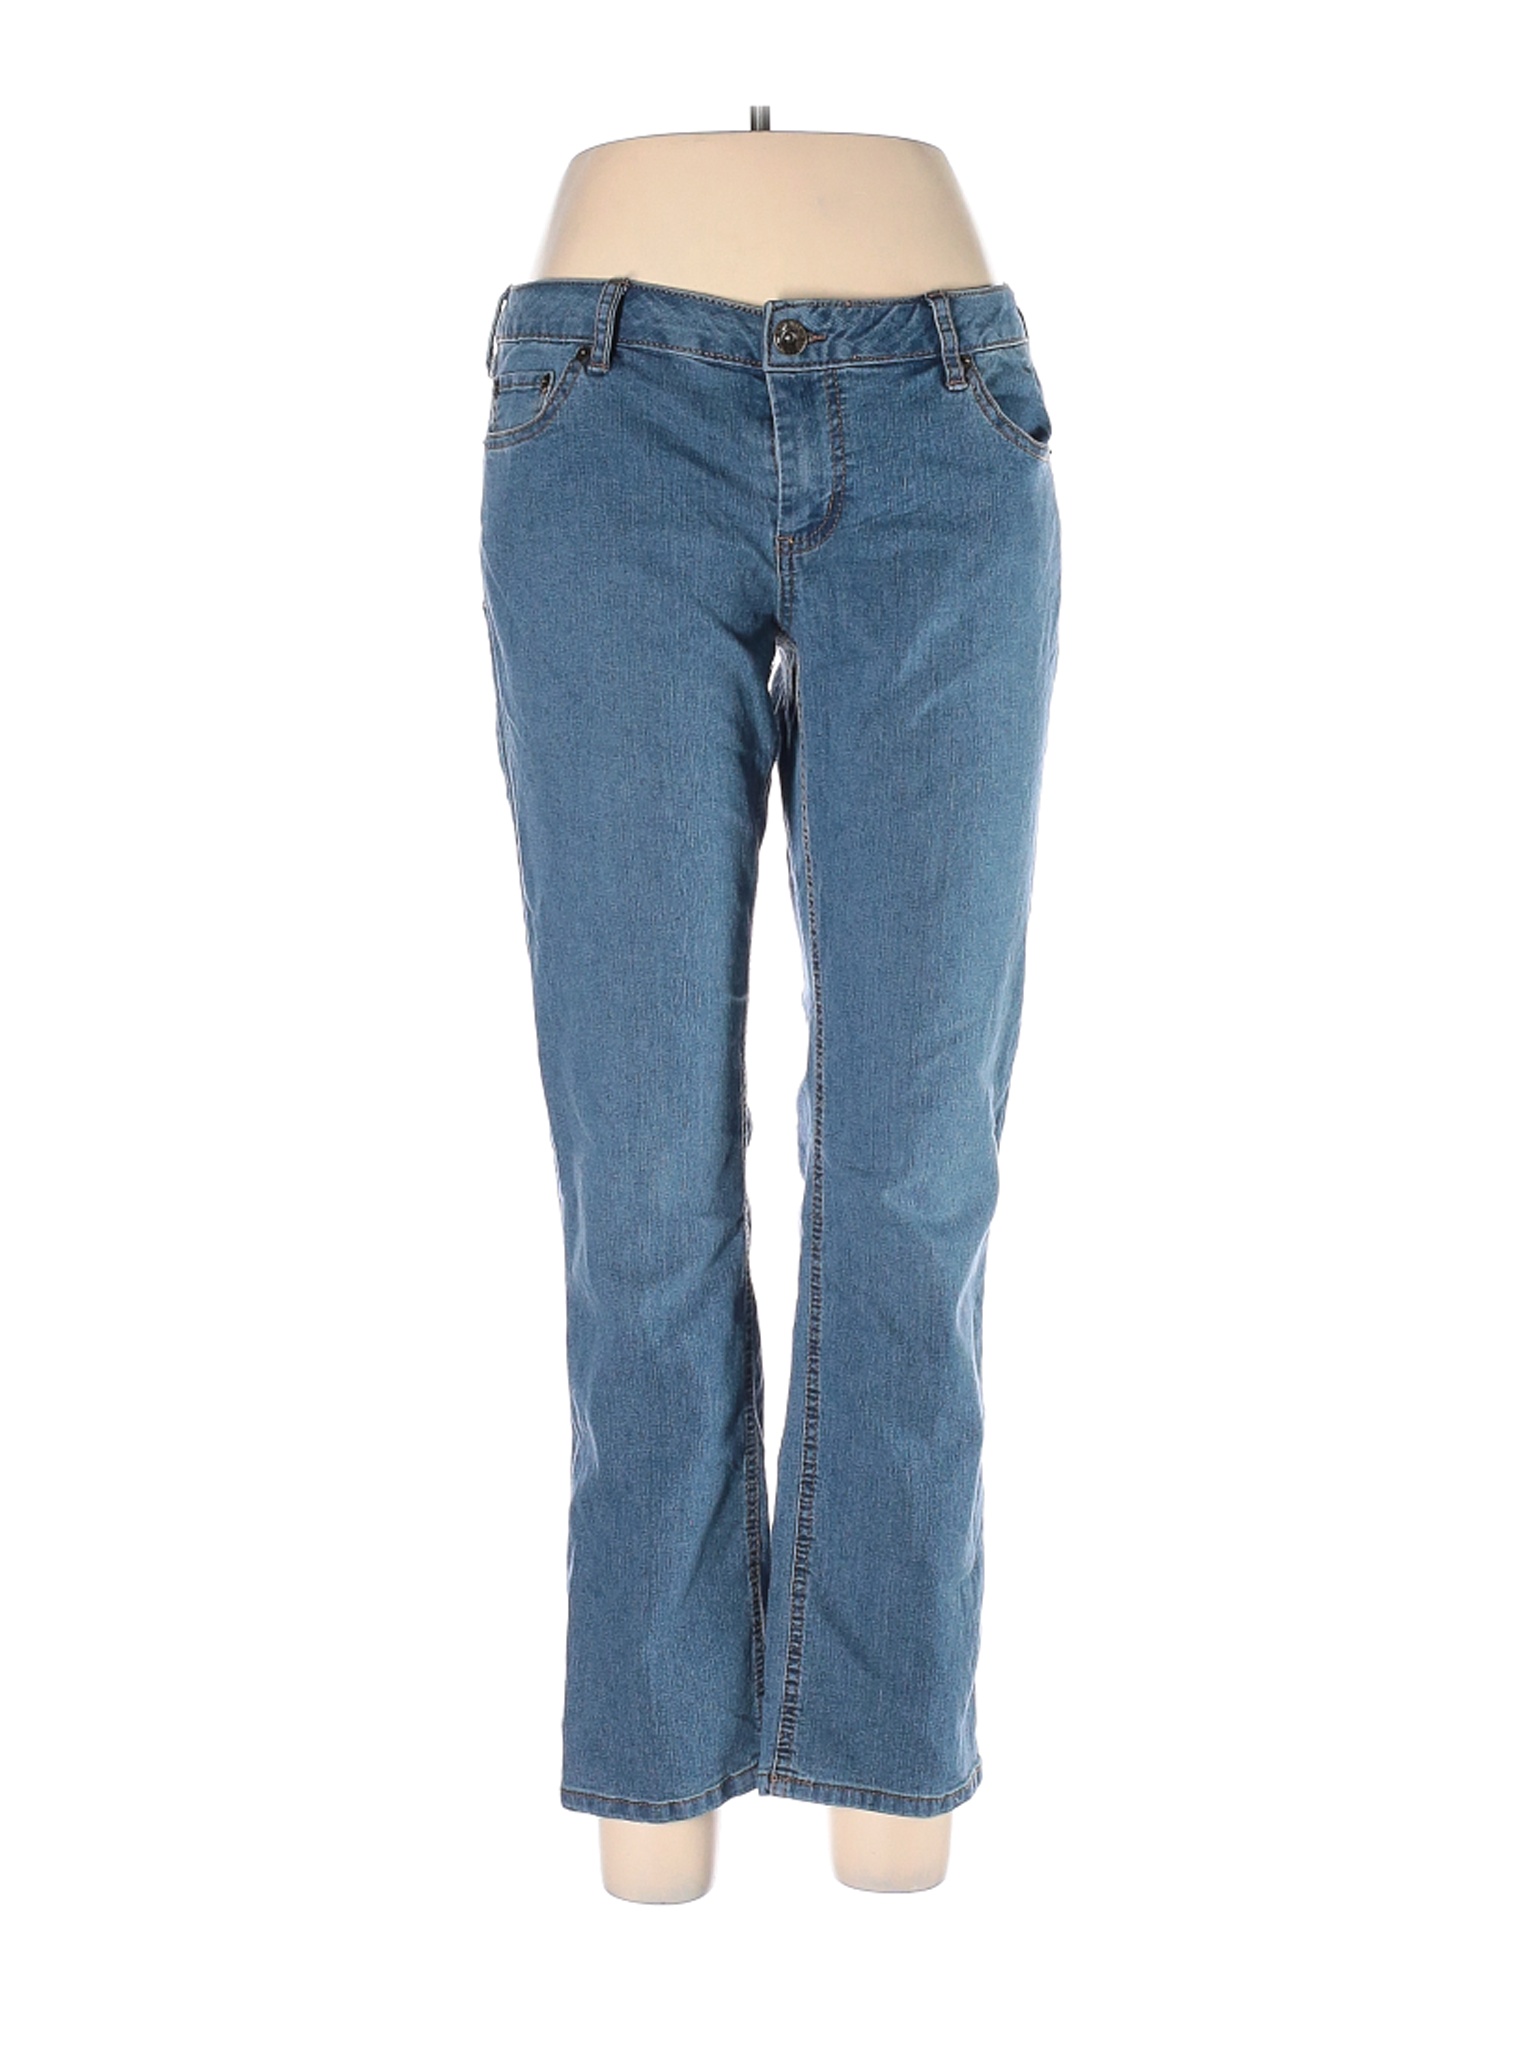 Natural Reflections Women Blue Jeans 10 Petites | eBay